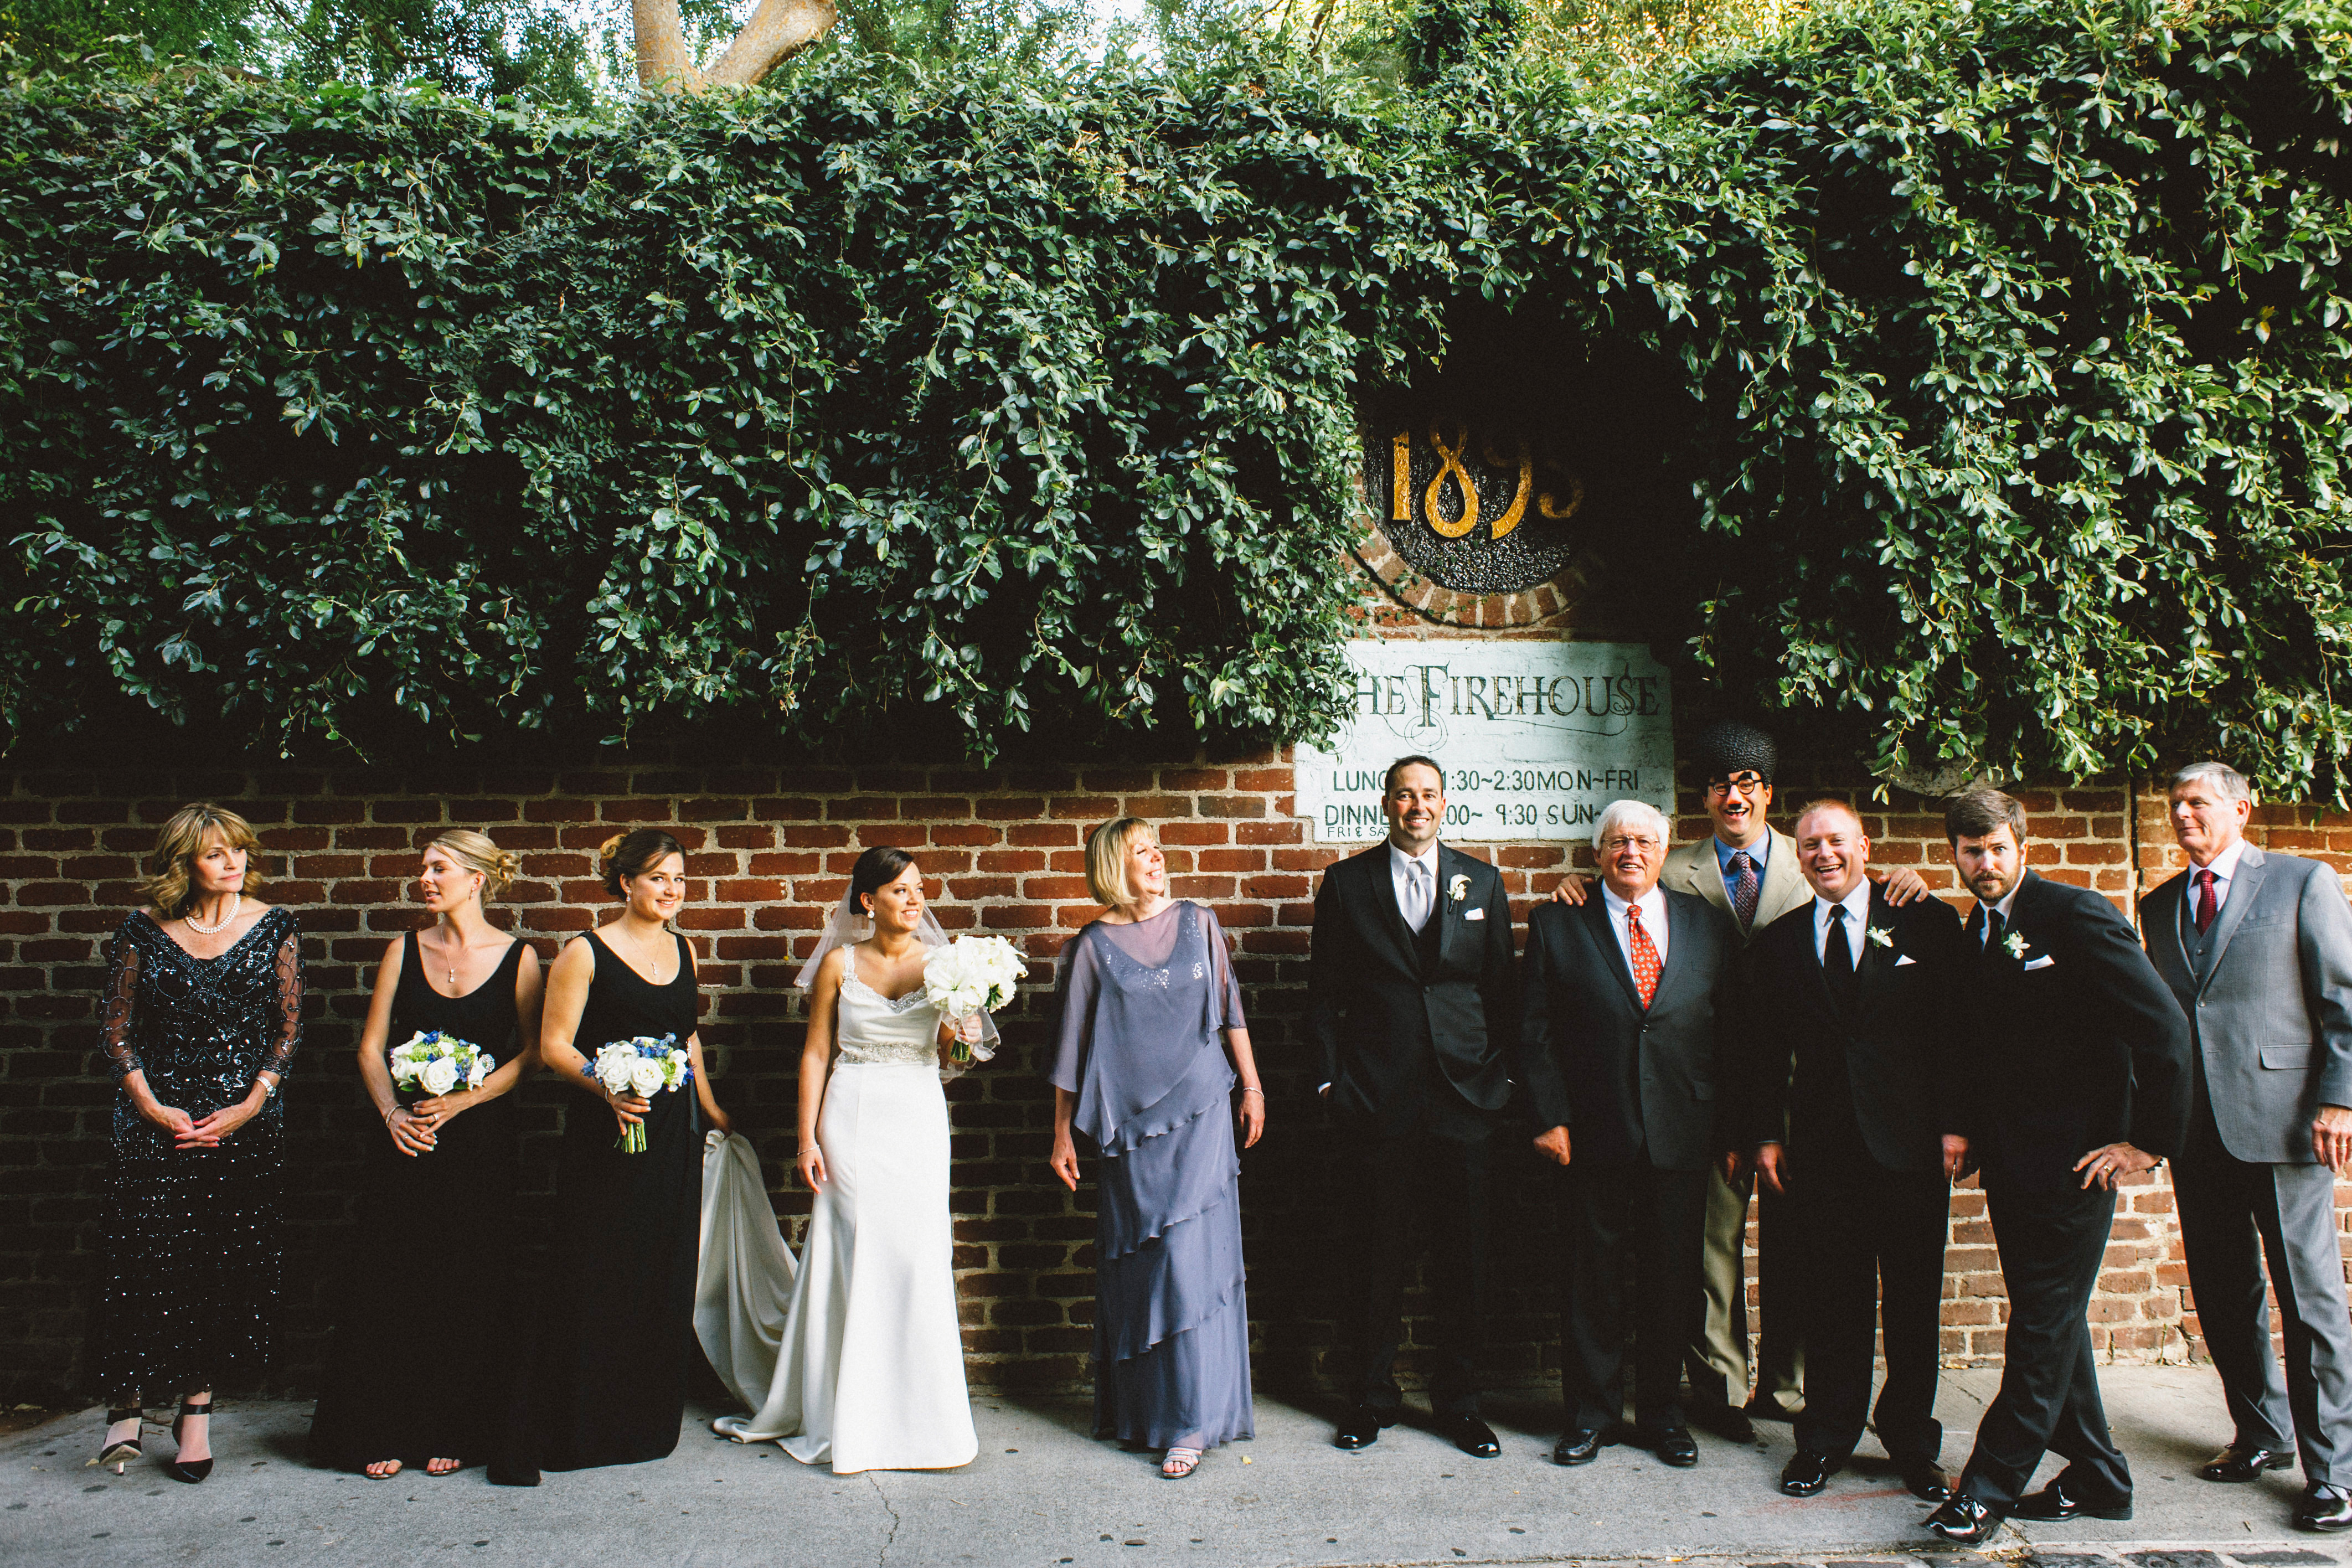 Photobombed family photo in the alley | Sacramento Firehouse Wedding